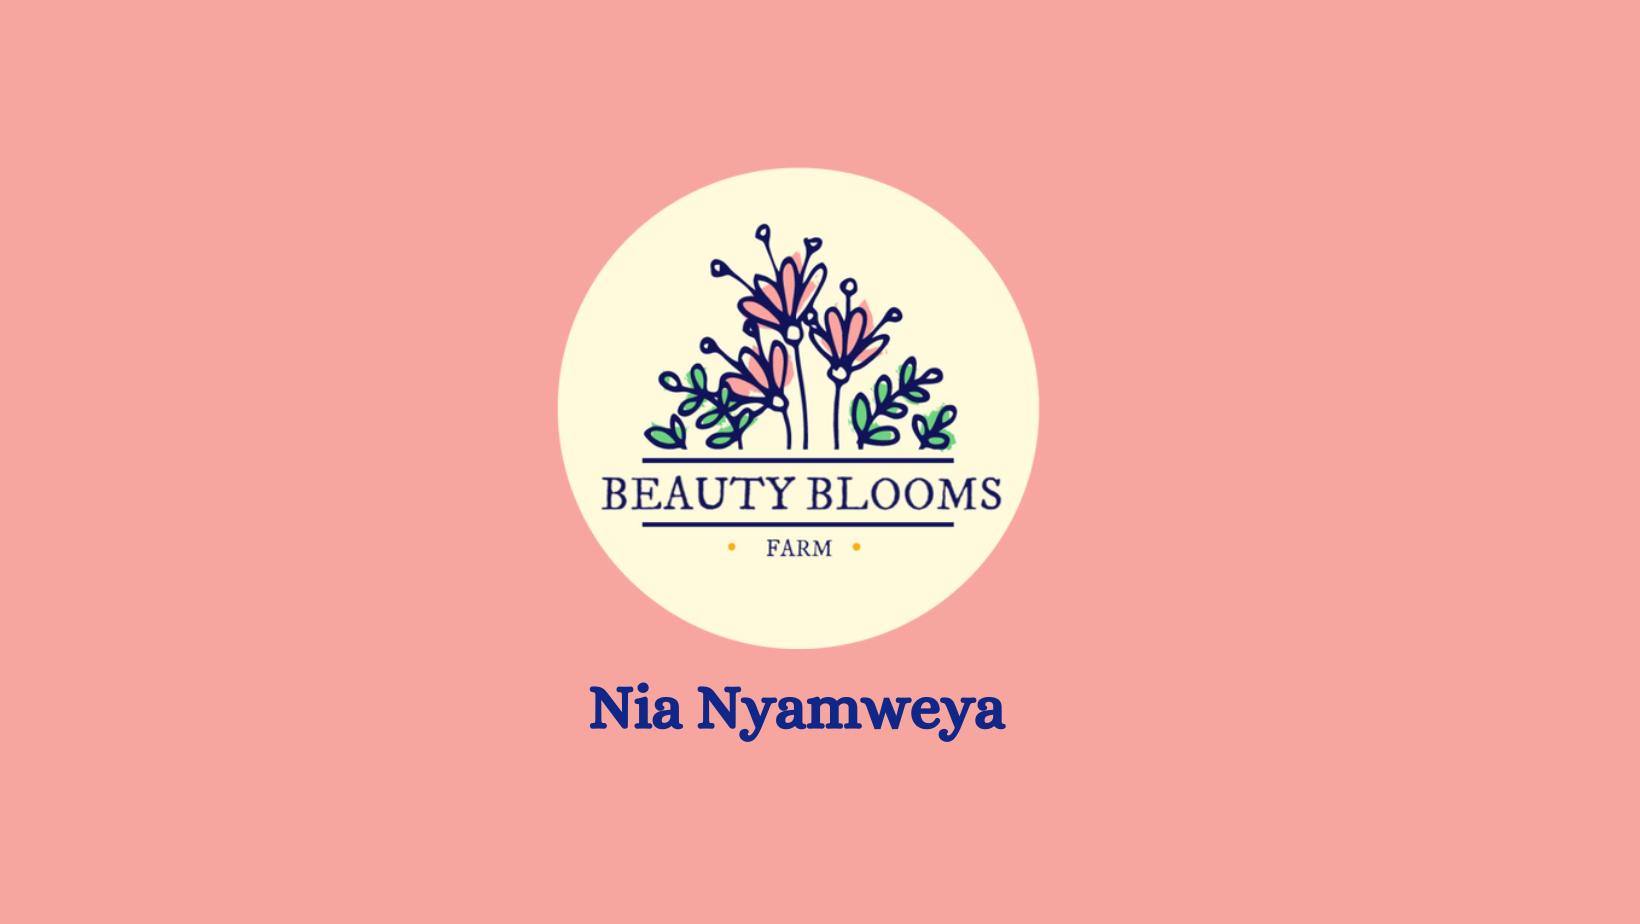 Beauty Blooms Farm, Nia Nyamweya